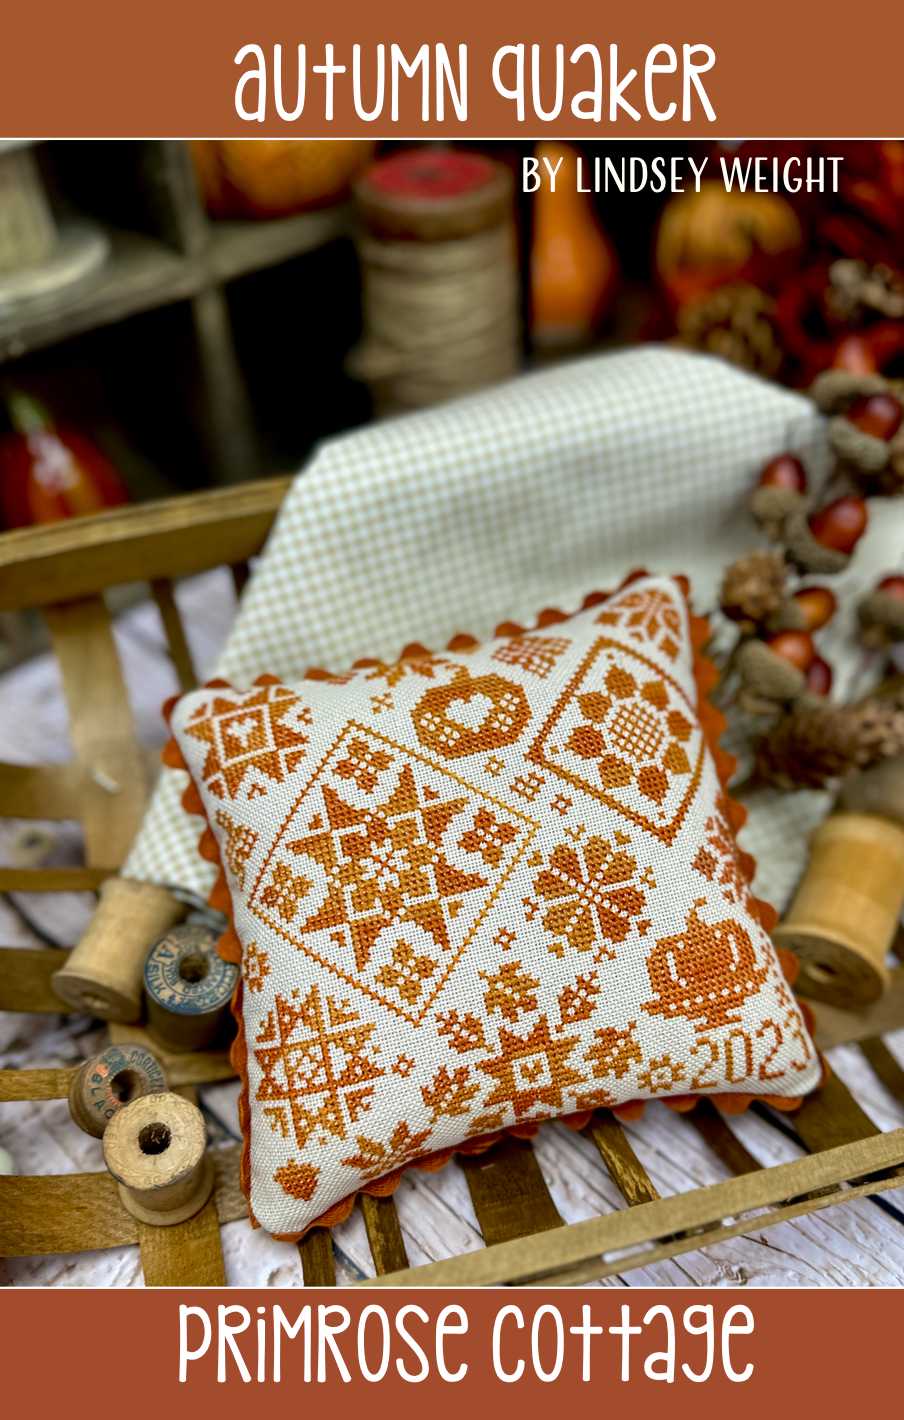 Colorado Cross Stitcher - Cross Stitching Patterns, Threads, Fabrics